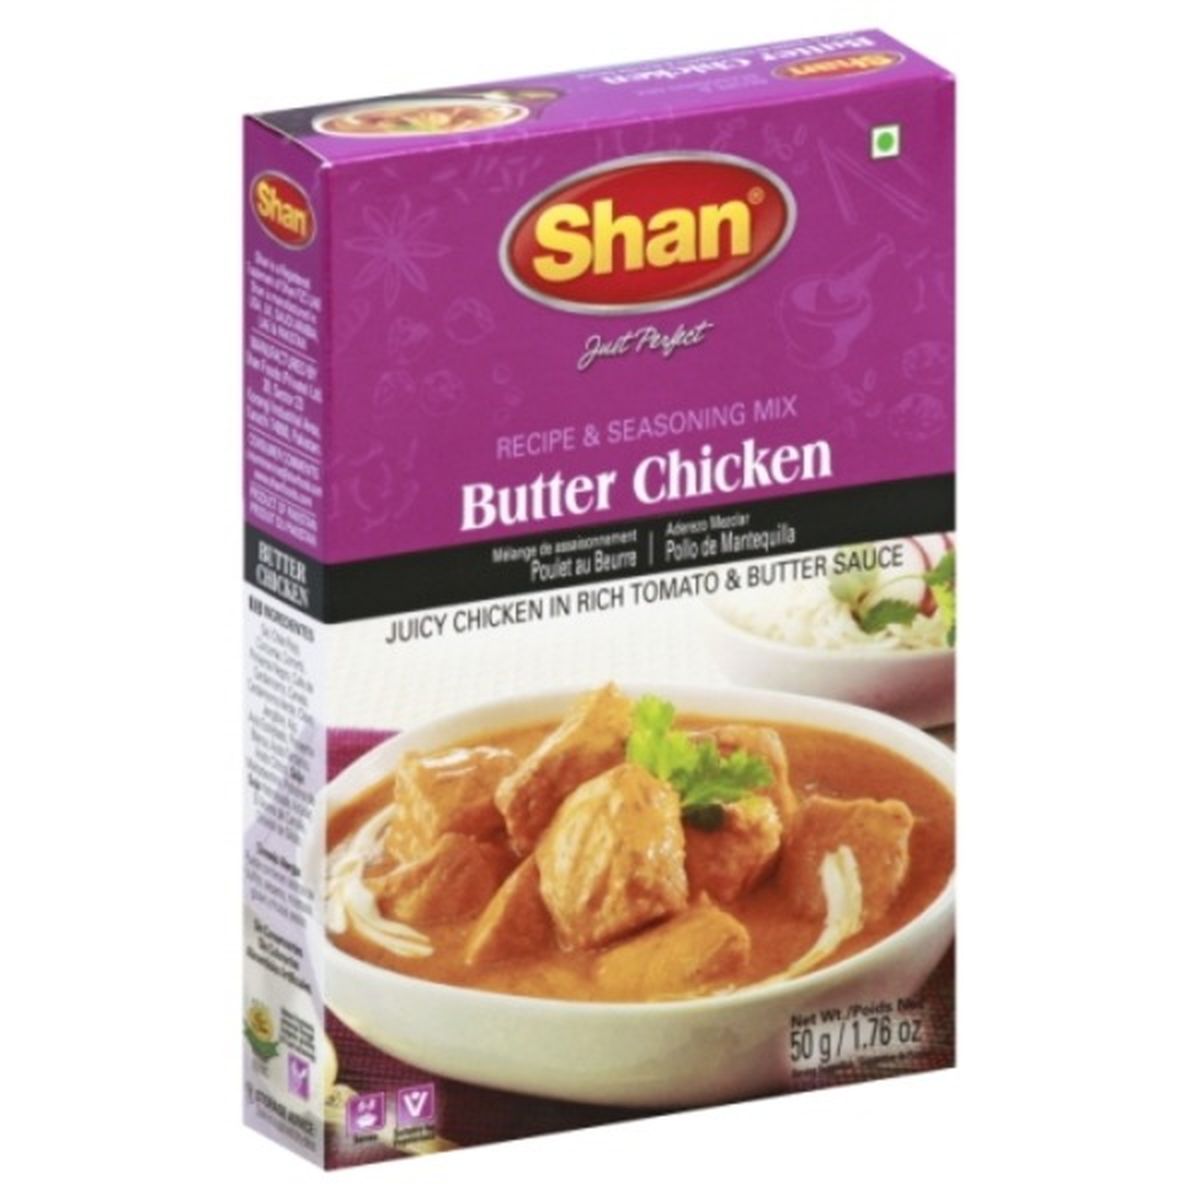 Calories in Shan Recipe & Seasoning Mix, Butter Chicken